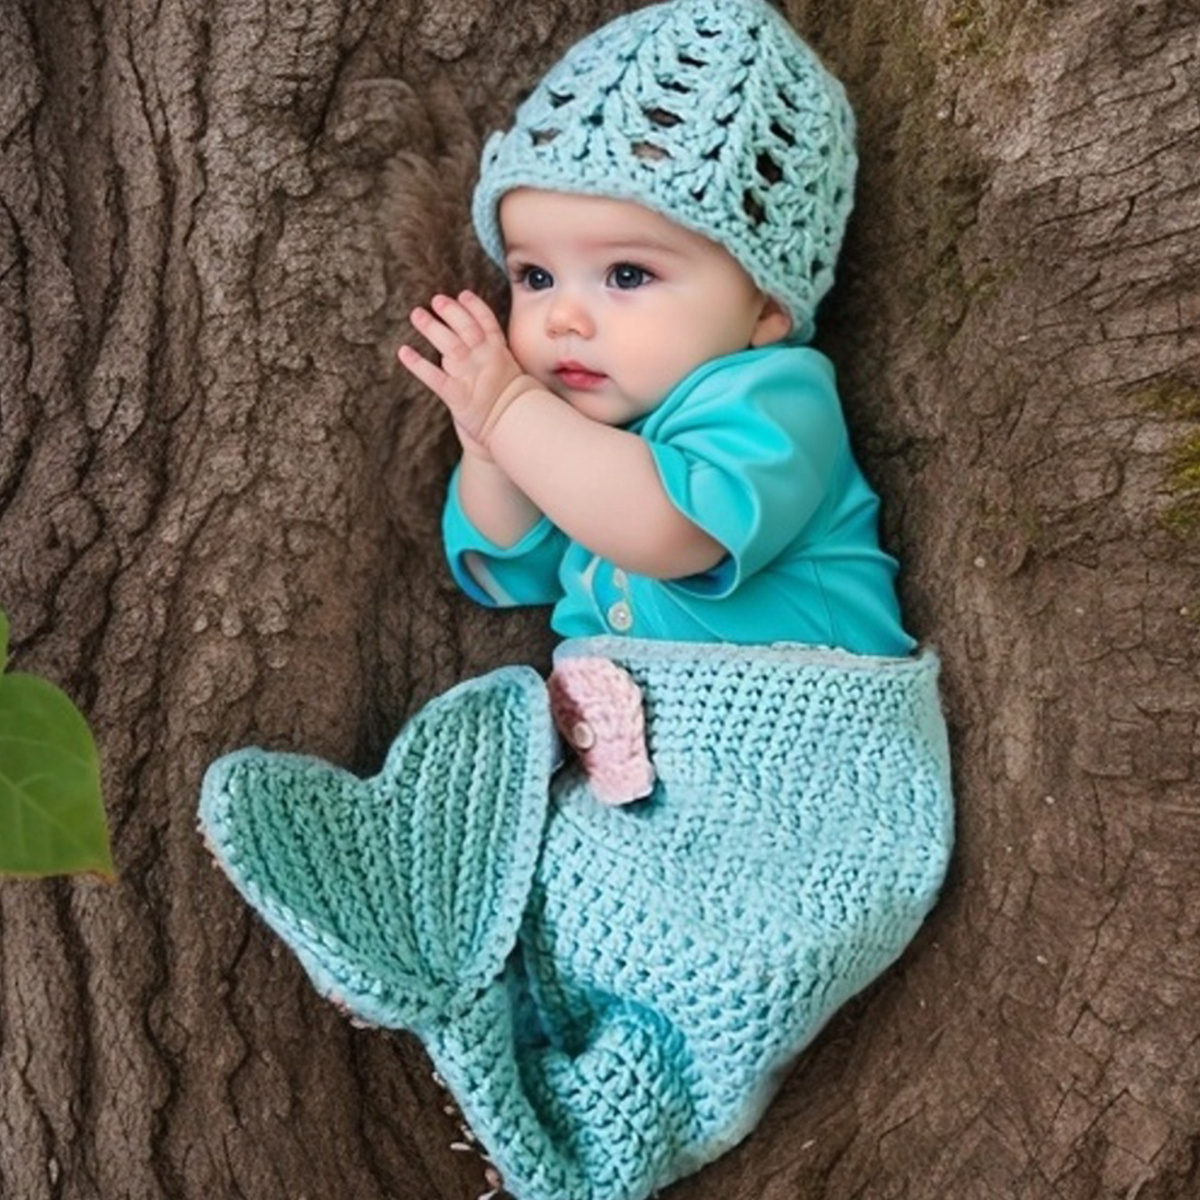 Newborn Baby Boy Girl Photo Shoot Props Outfits Crochet Knit Cute